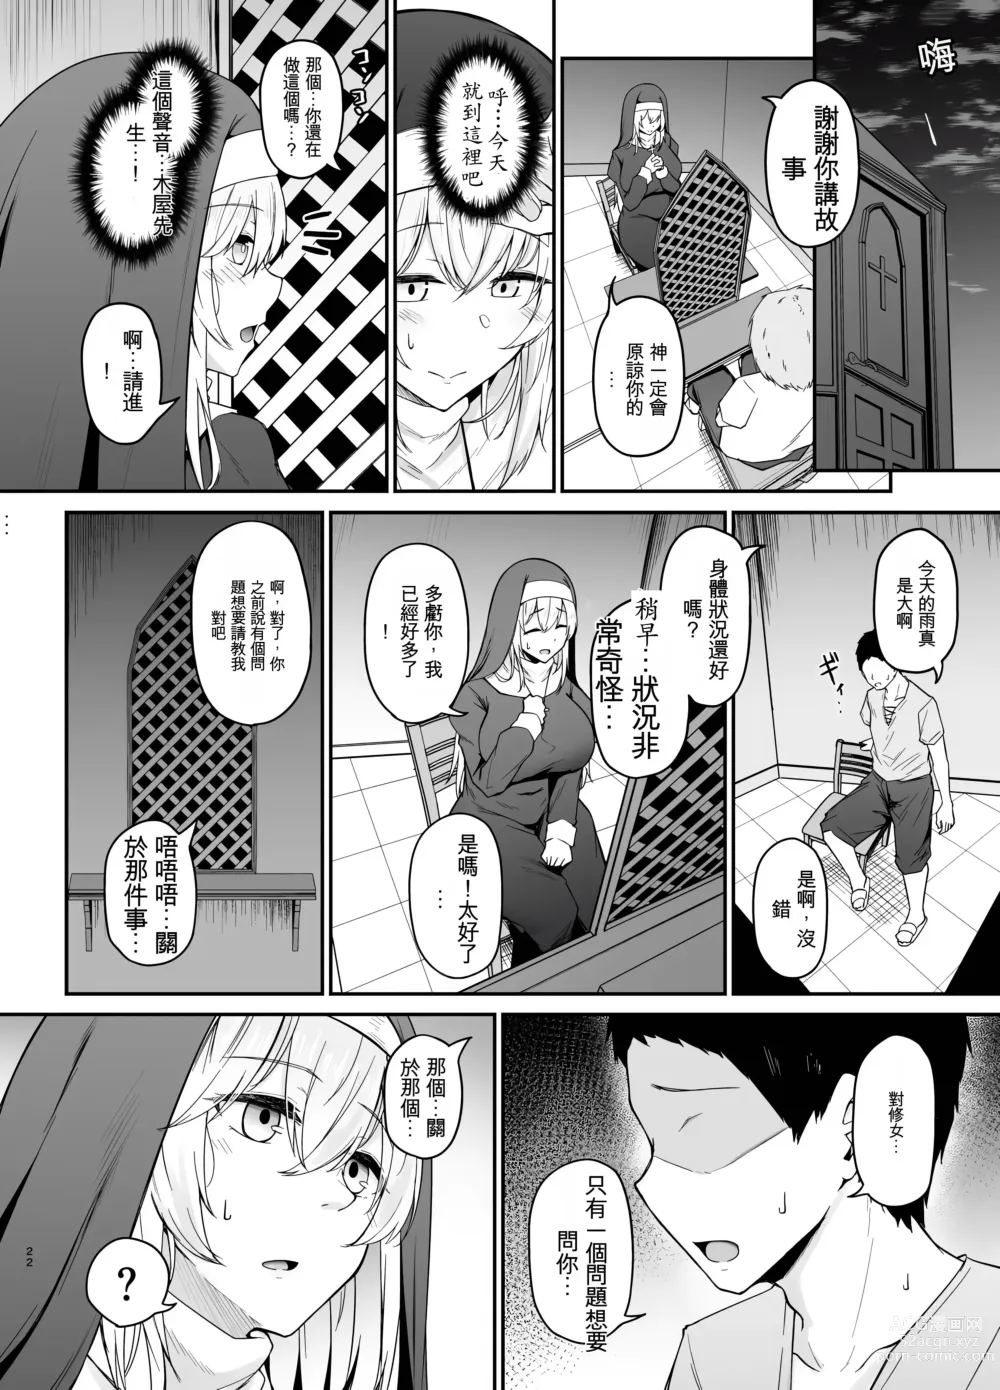 Page 21 of doujinshi 你討厭沒有品味的女人嗎?